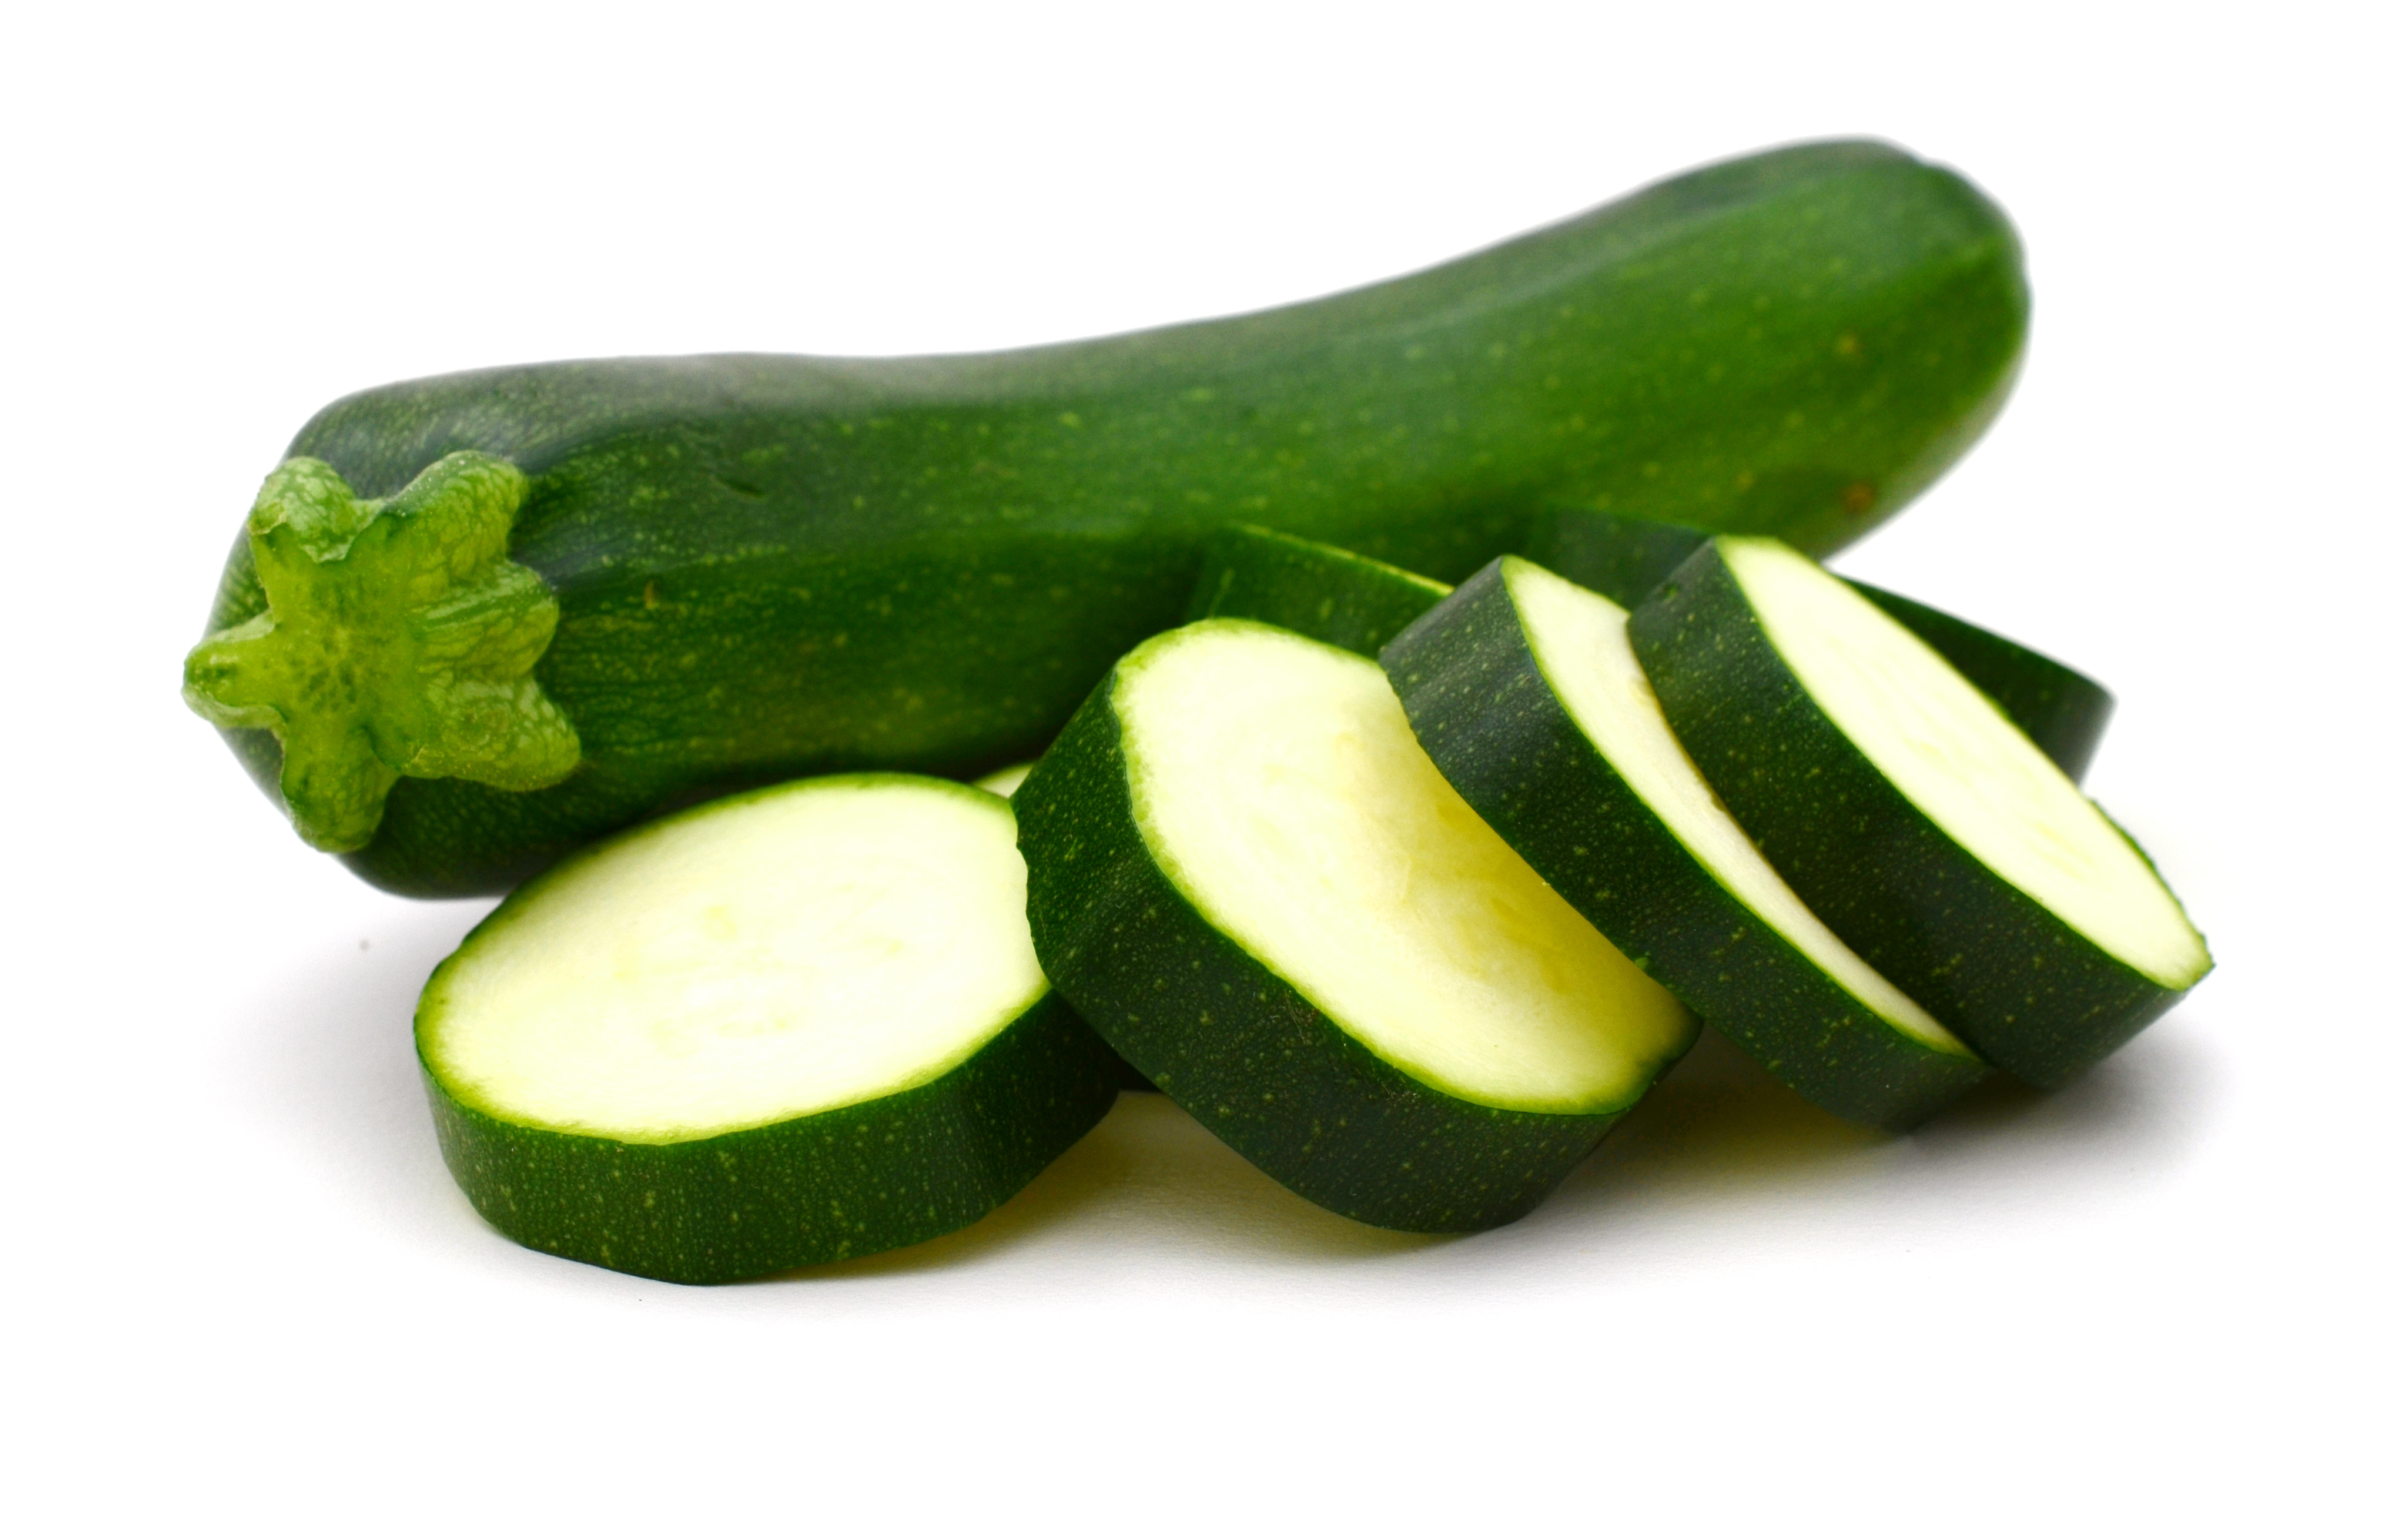 A whole green zucchini and zucchini slices.